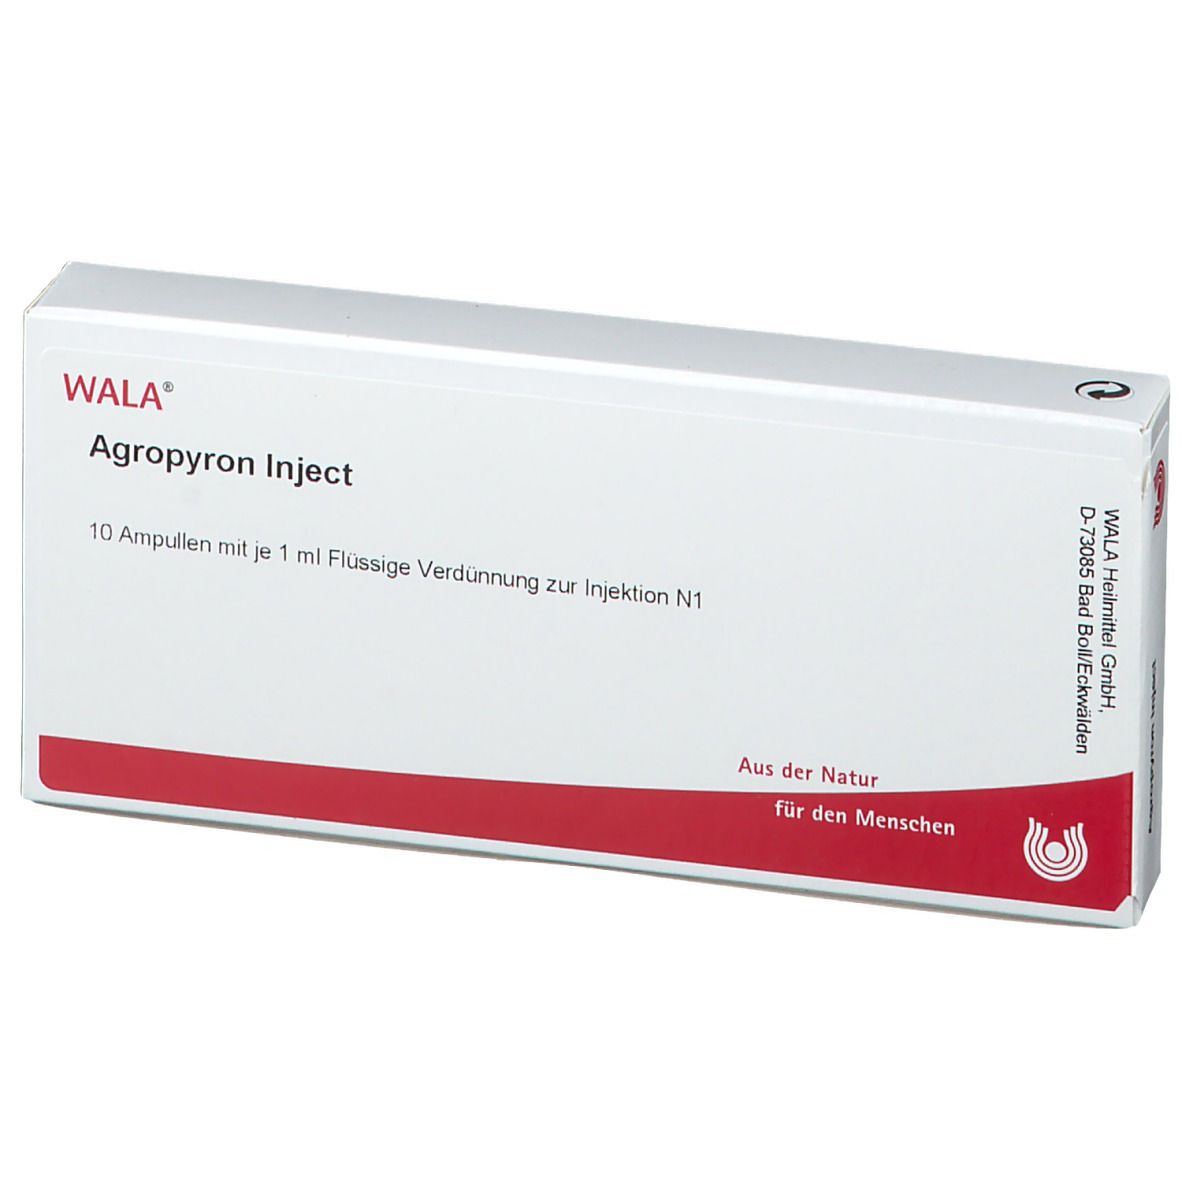 WALA® Agropyron Inject Amp.